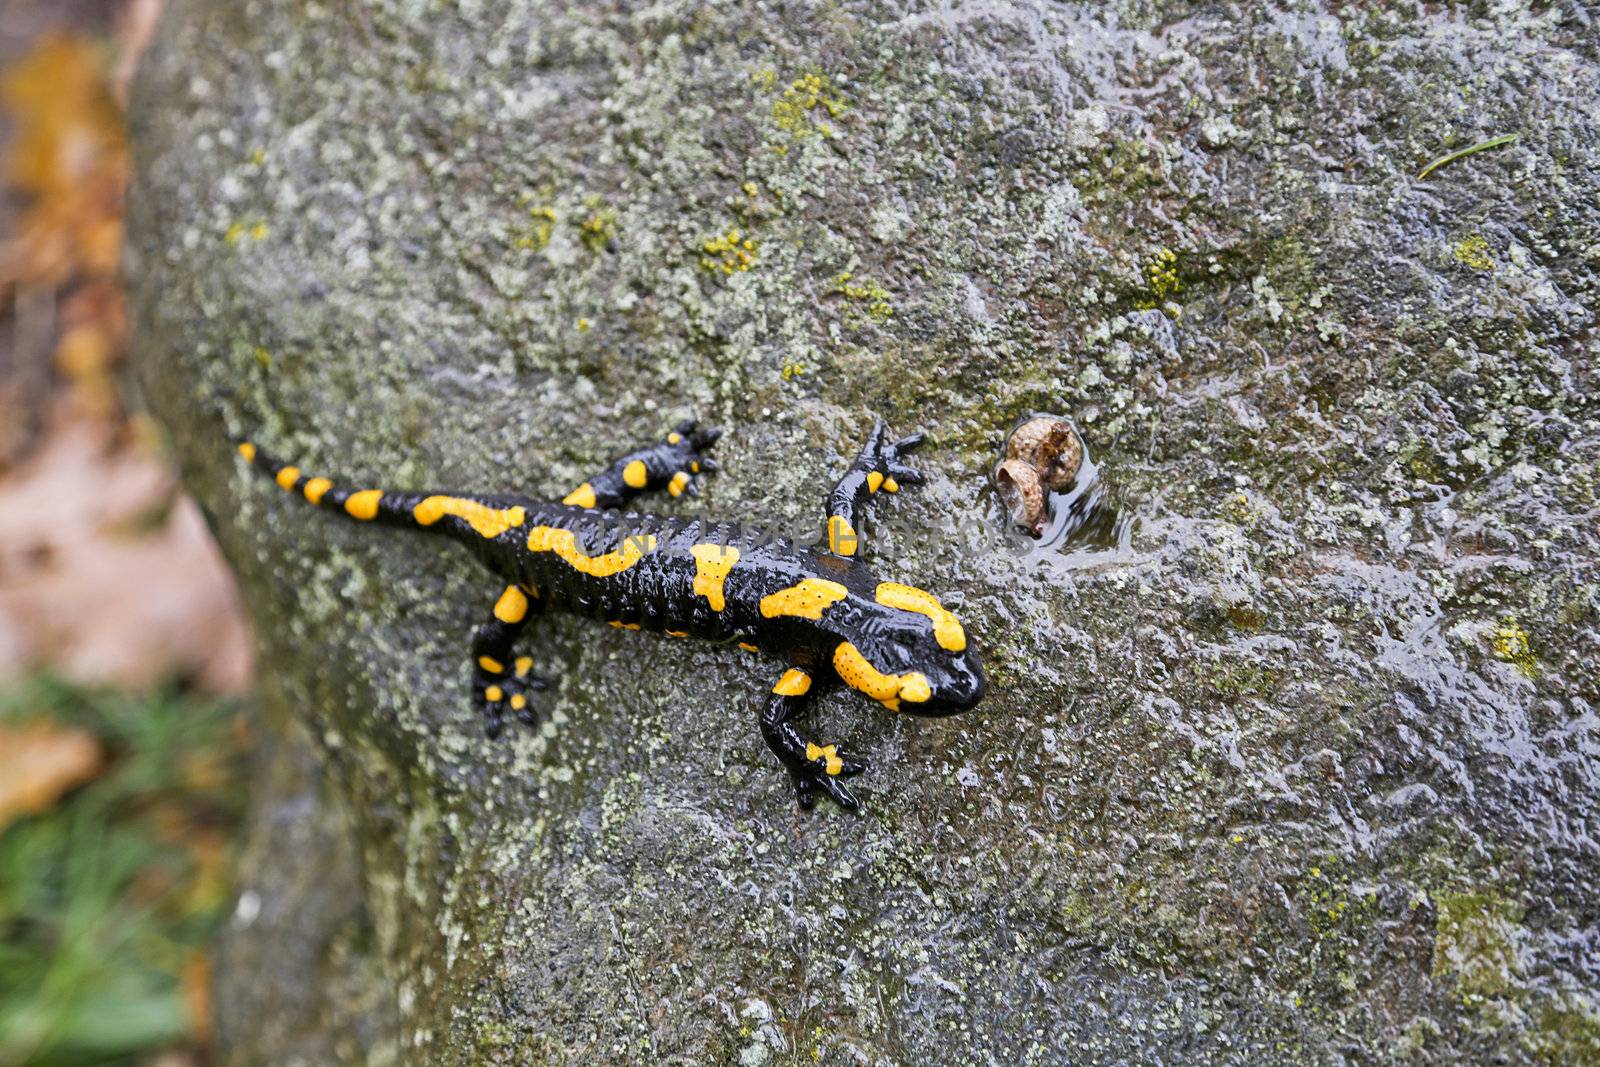 Closeup of a fire salamander on a wet stone